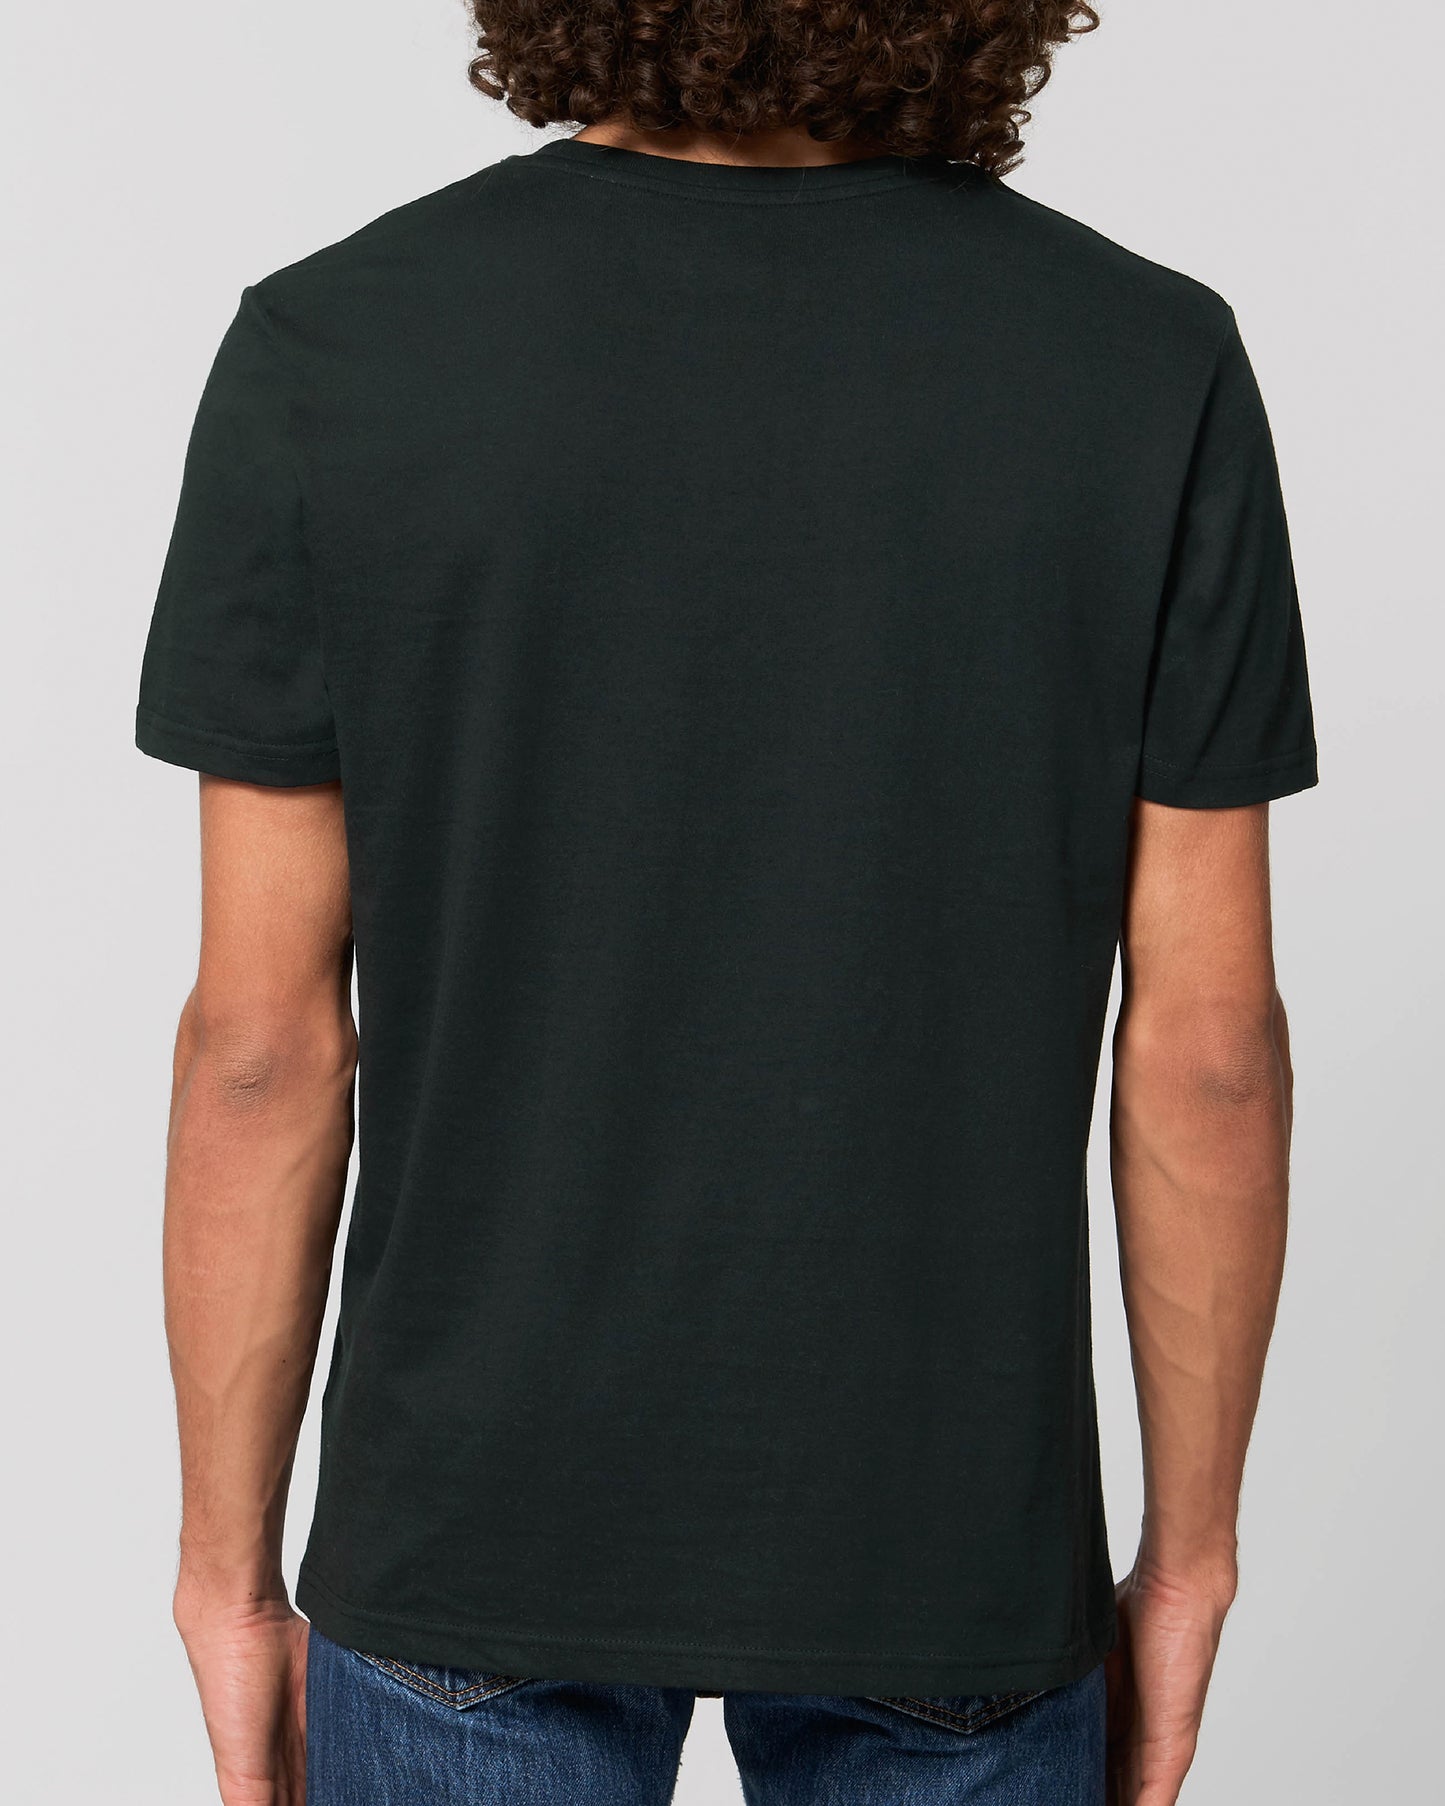 Hang Ten Surfer T-shirt - Black